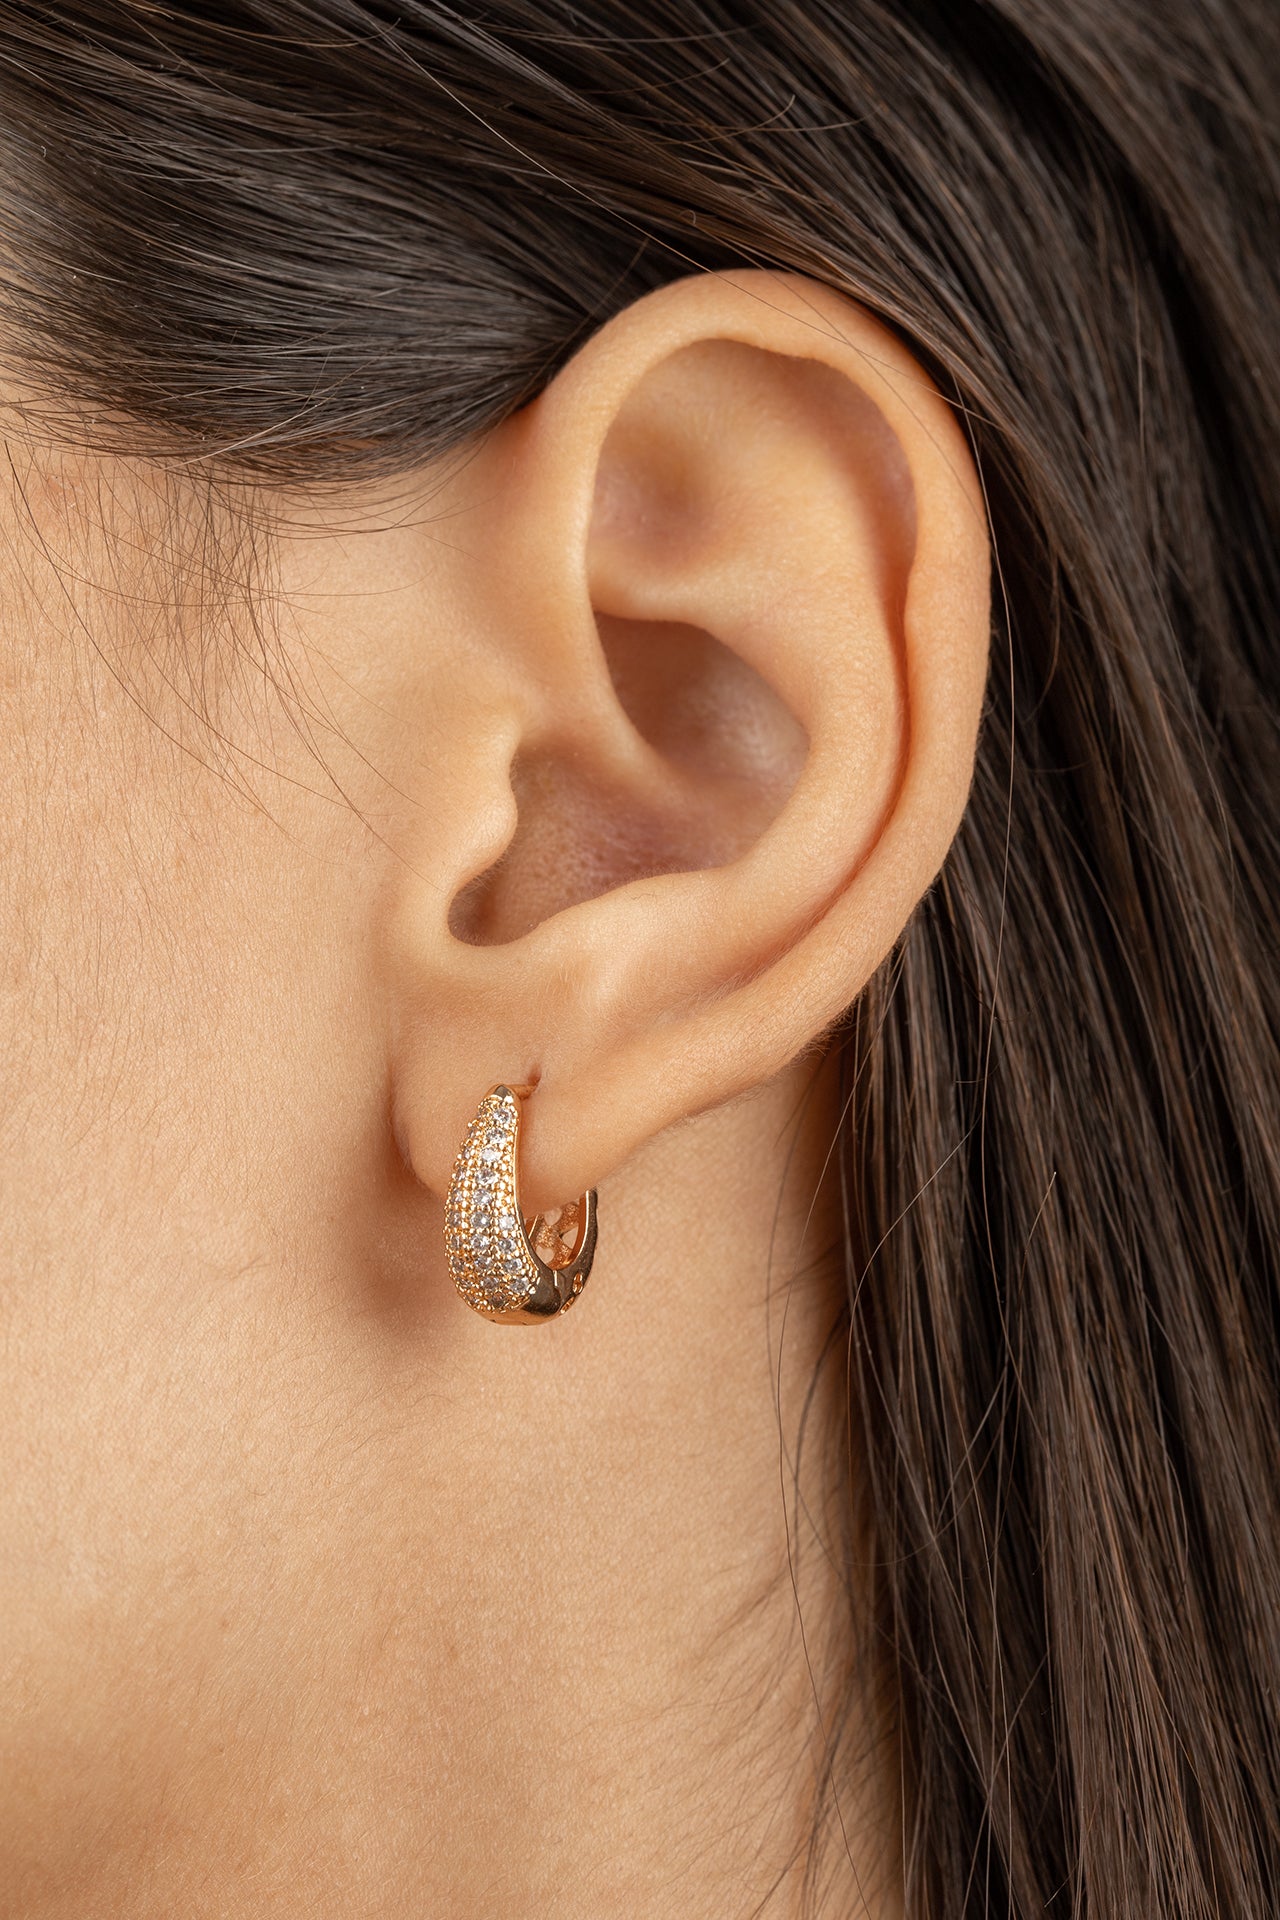 Fame Earrings - Dorado